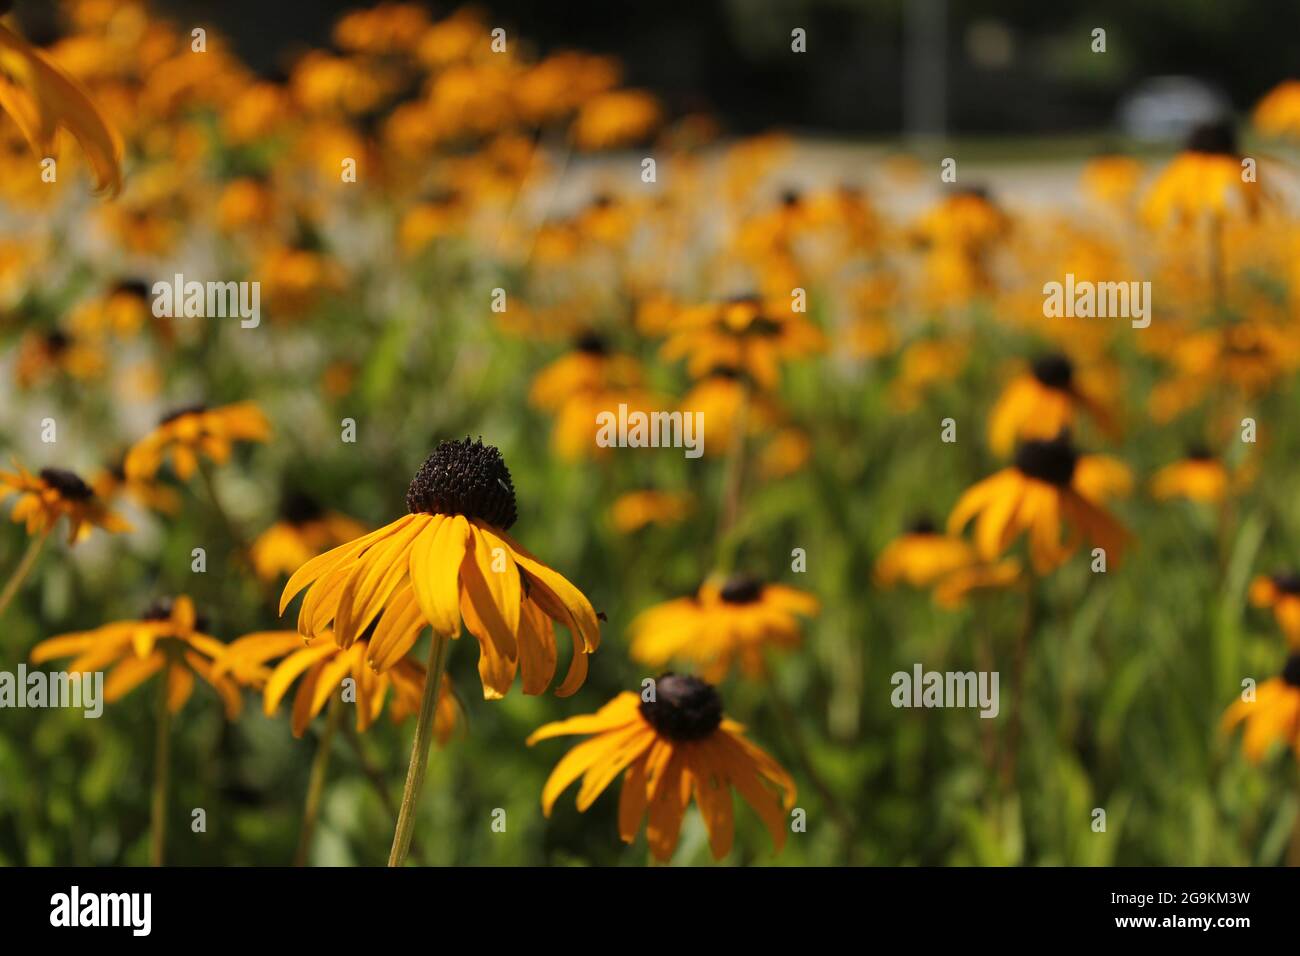 Wildflowers in bright sunlight Rudbeckia hirta Stock Photo